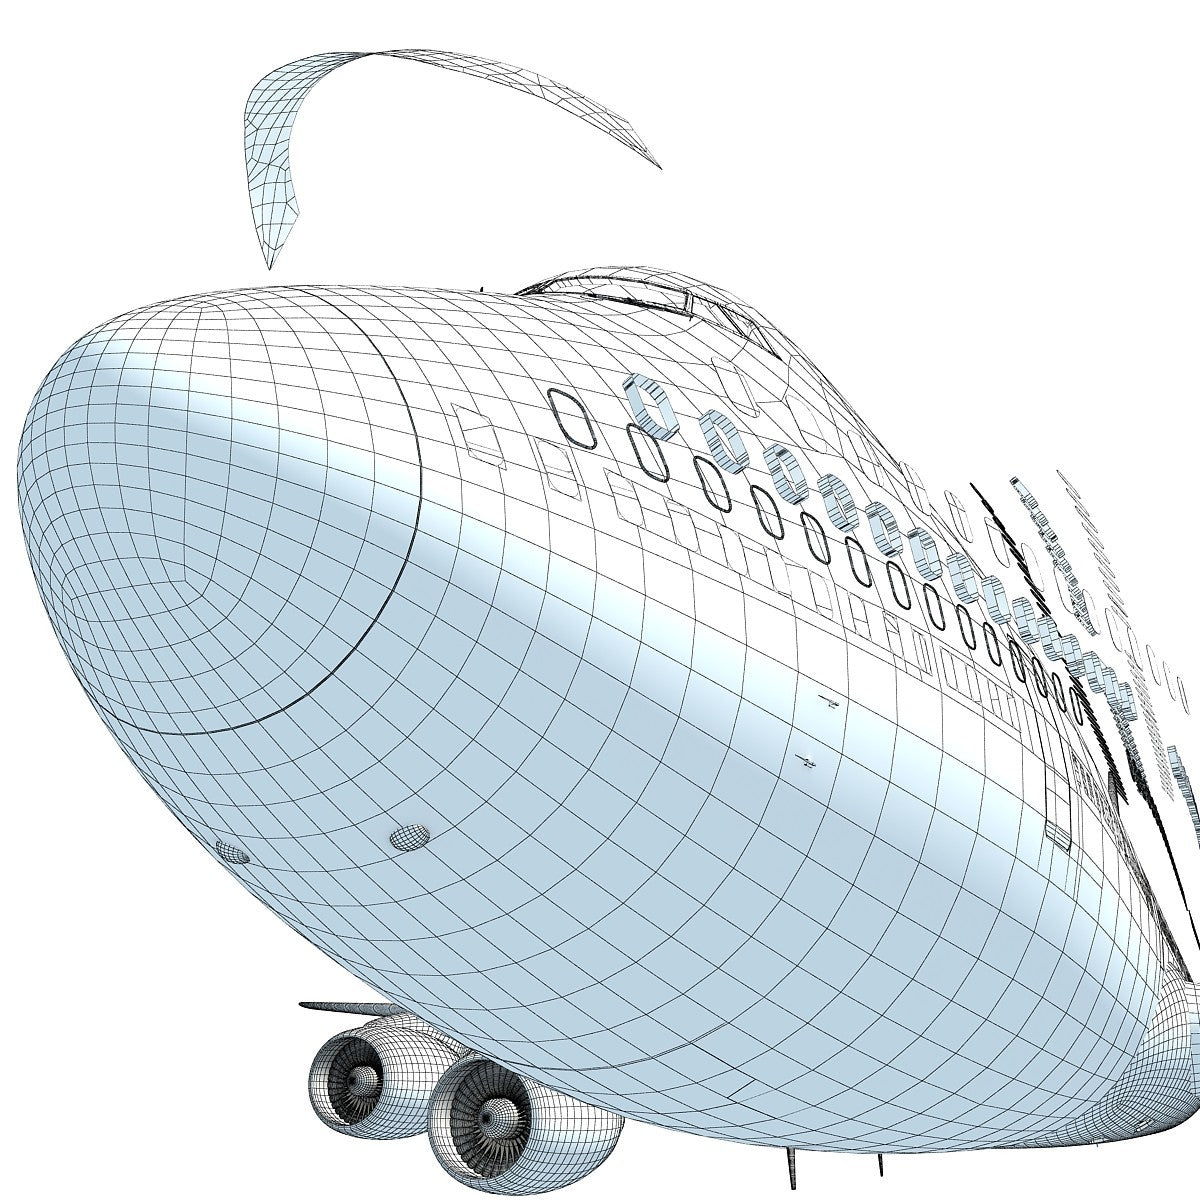 Boeing 3D Model